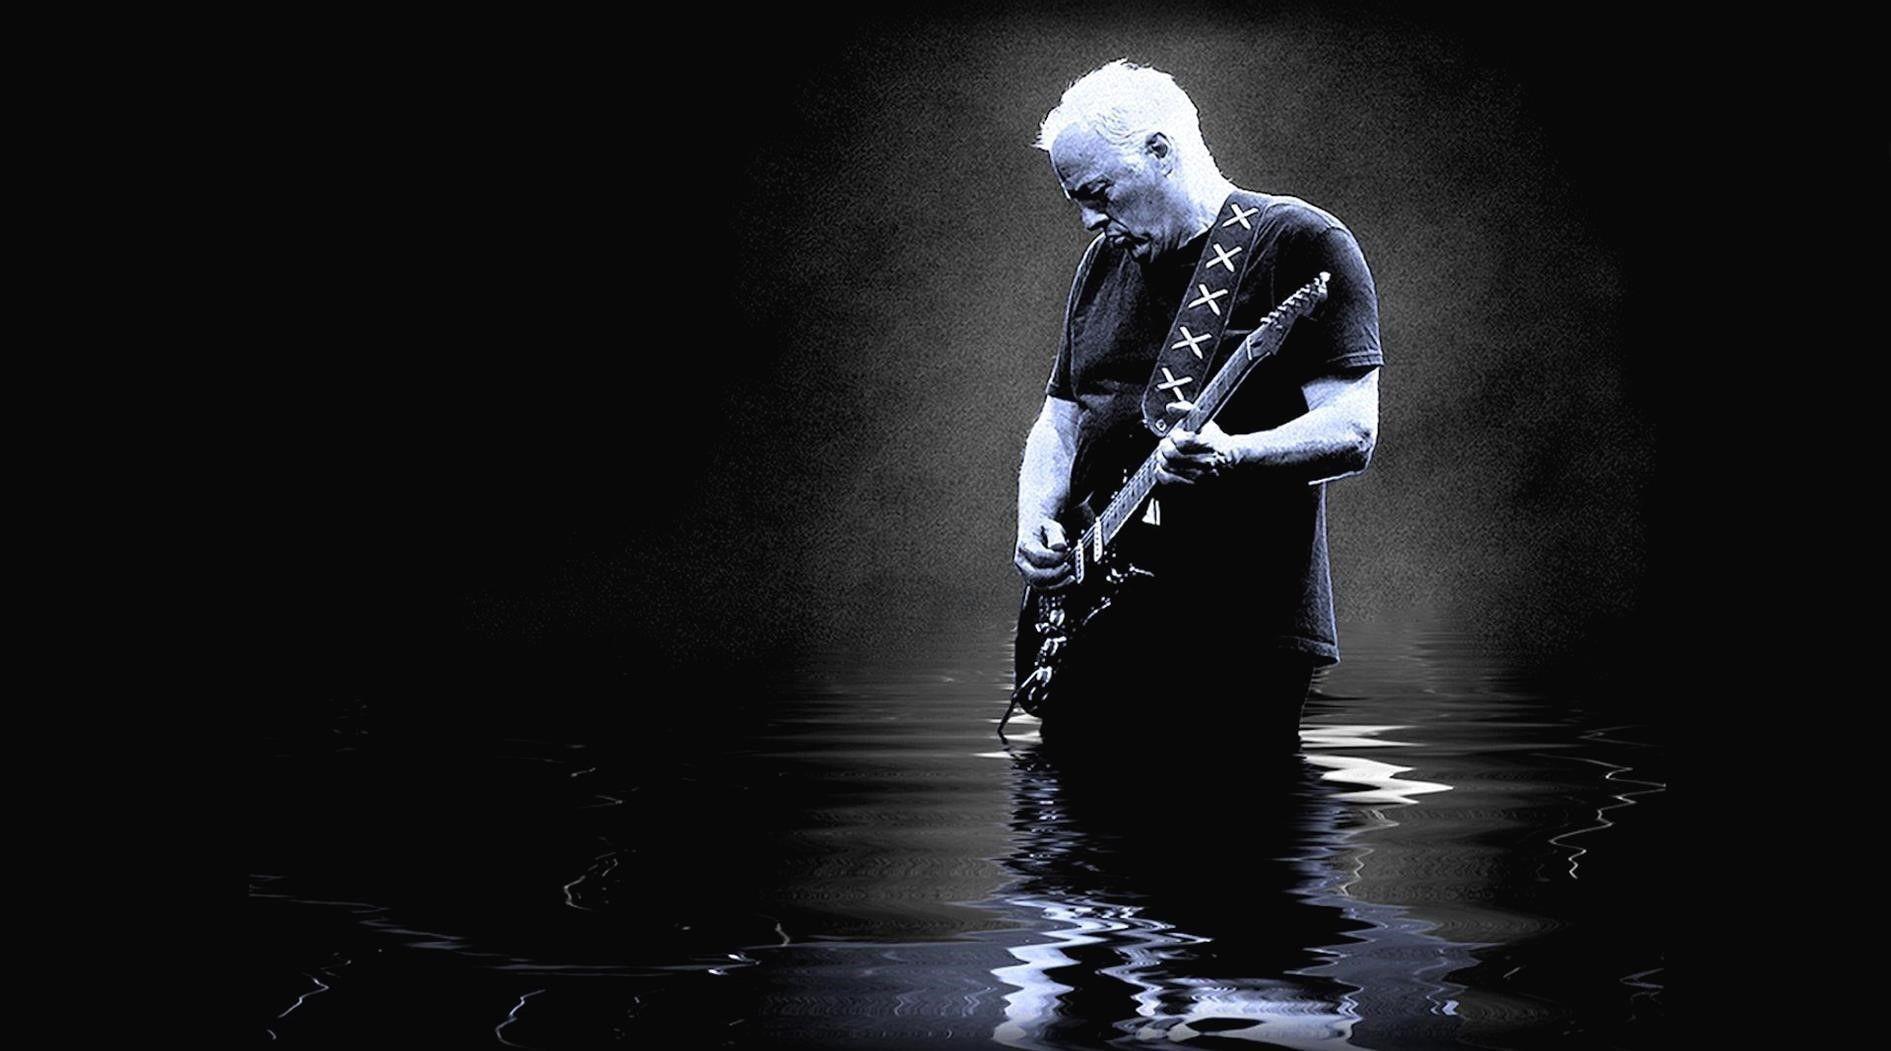 Best HD Photo Wallpaper Pics of David Gilmour. Best Pink Floyd